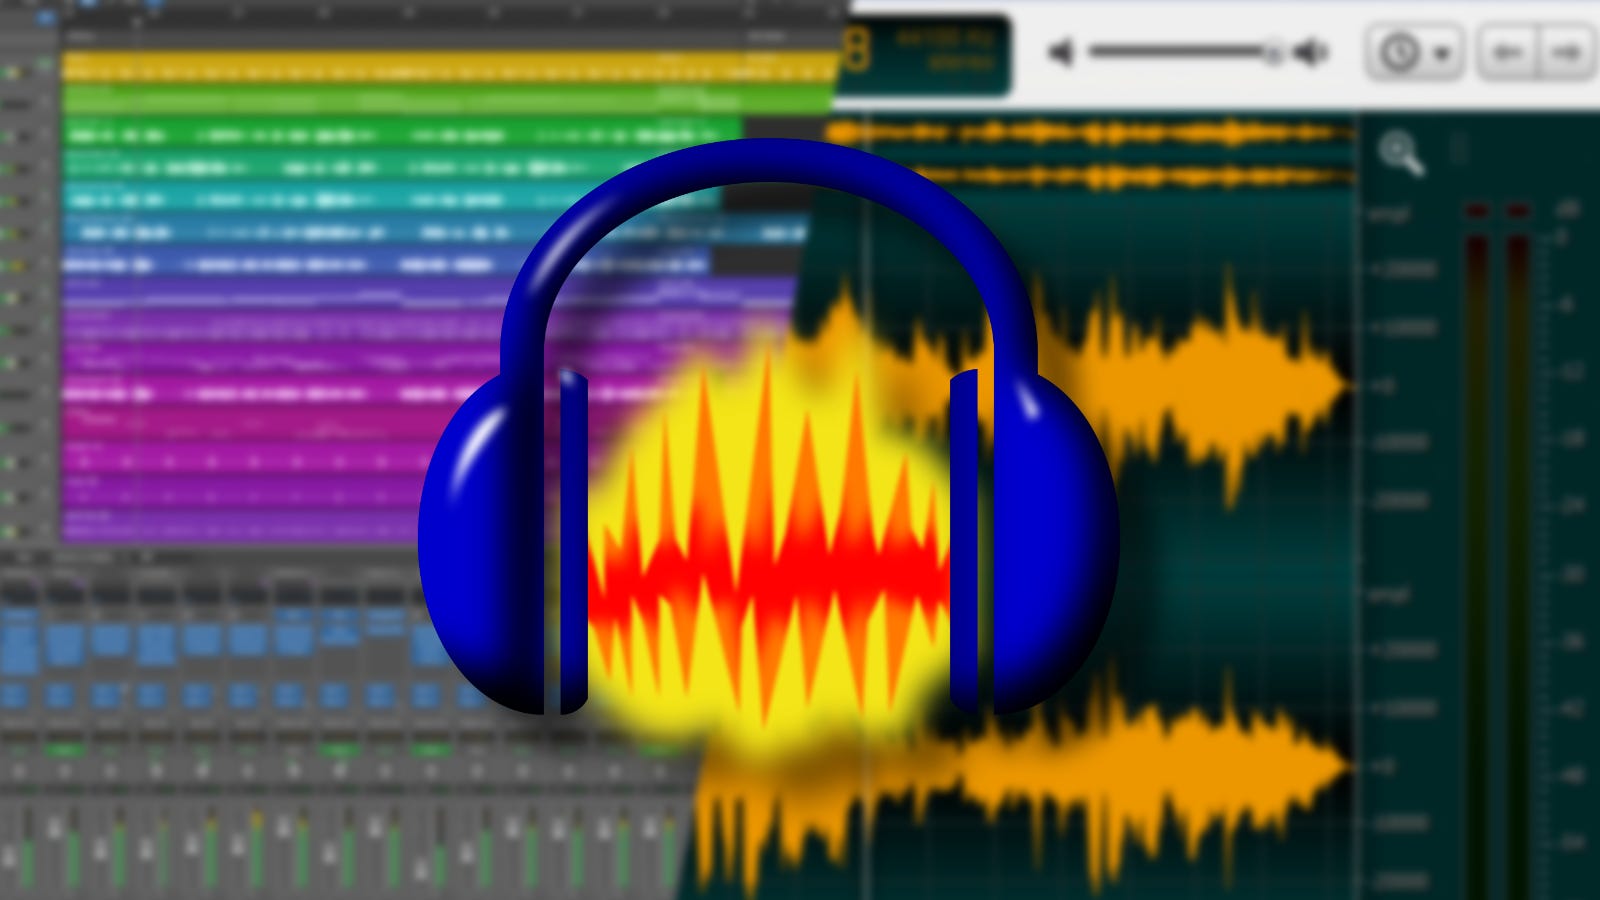 audacity audio software for mac